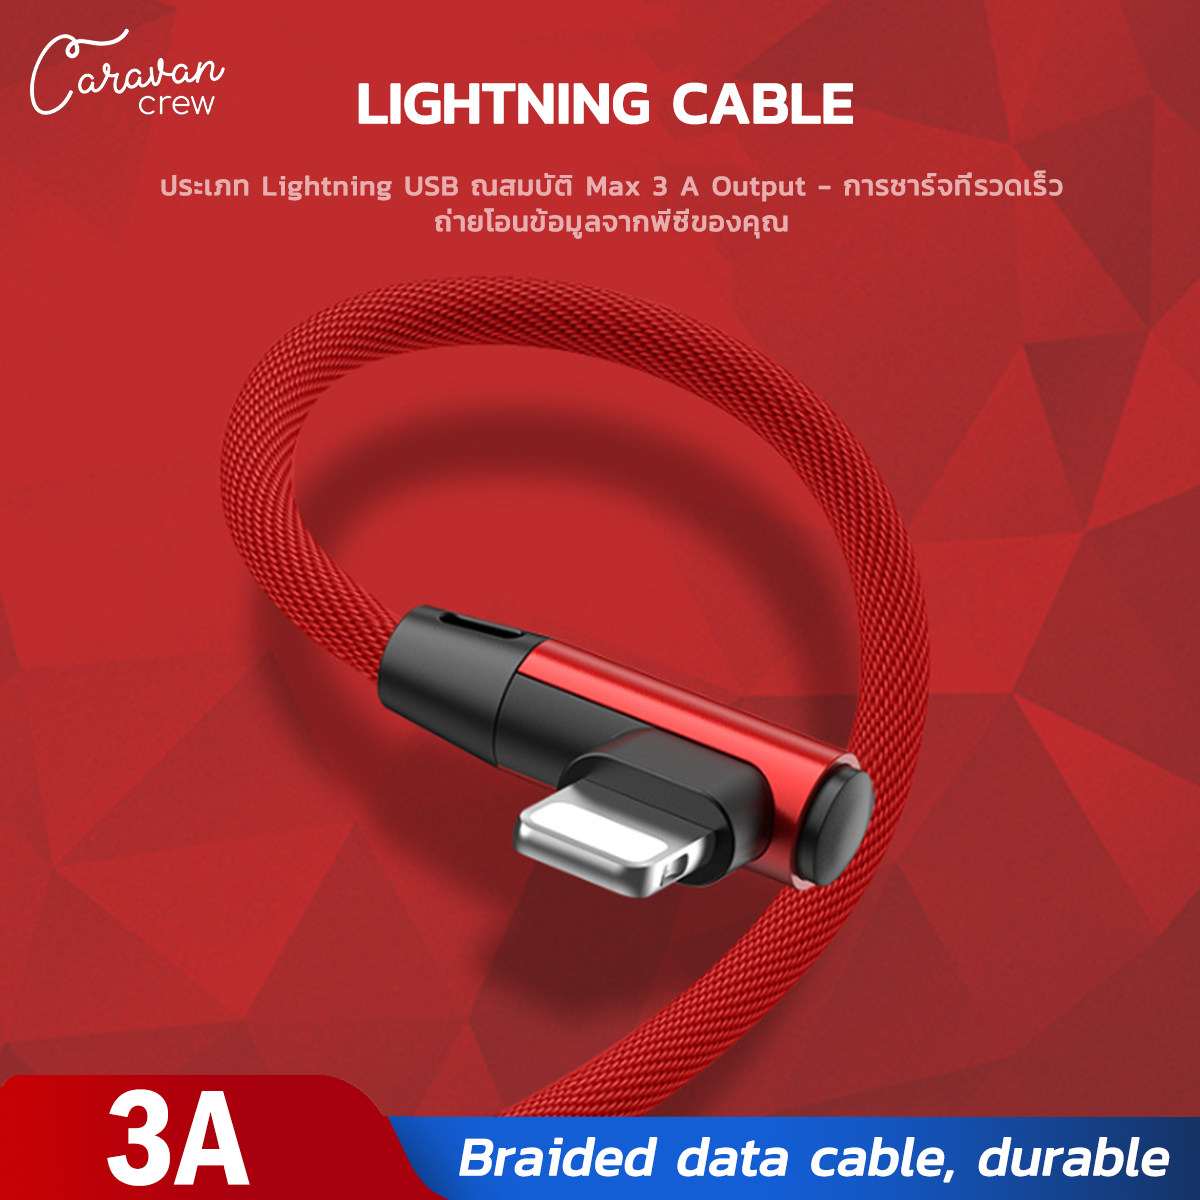 Caravan Crew สายชาร์จเร็ว Lightning USB Data Cable Charger สายชาร์จ แข็งแรงทนทาน สายถัก 1m Fast charger Cable